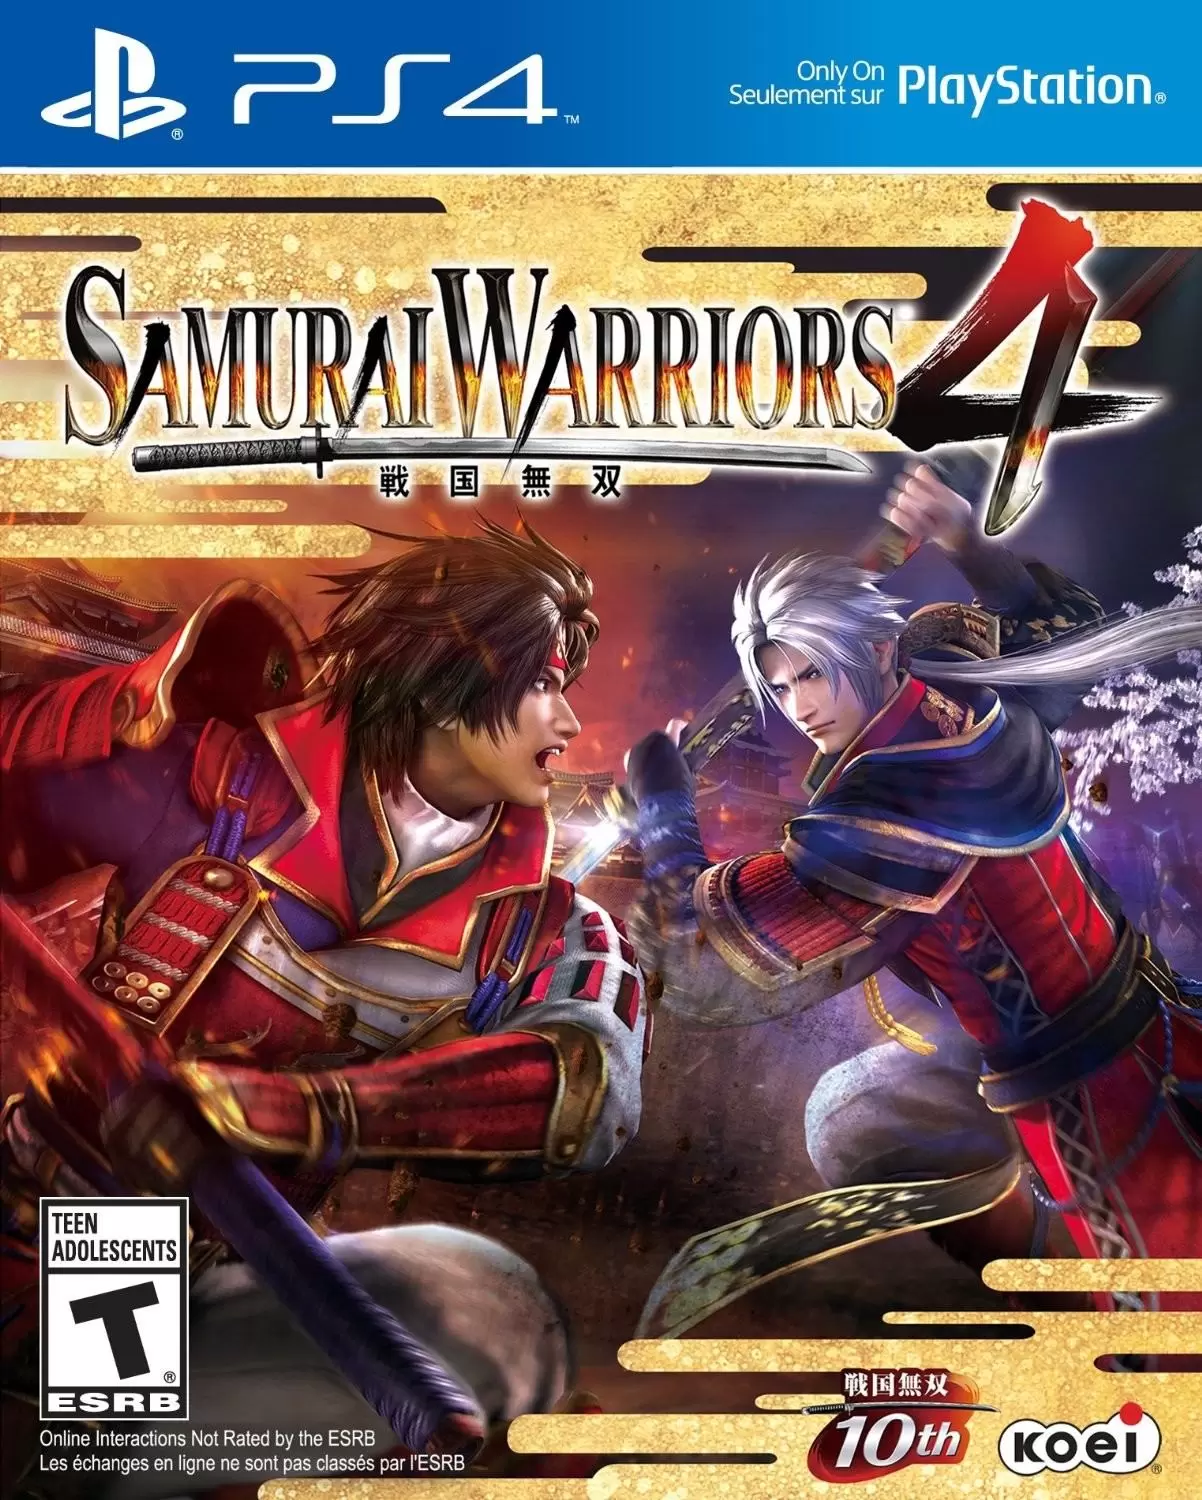 PS4 Games - Samurai Warriors 4